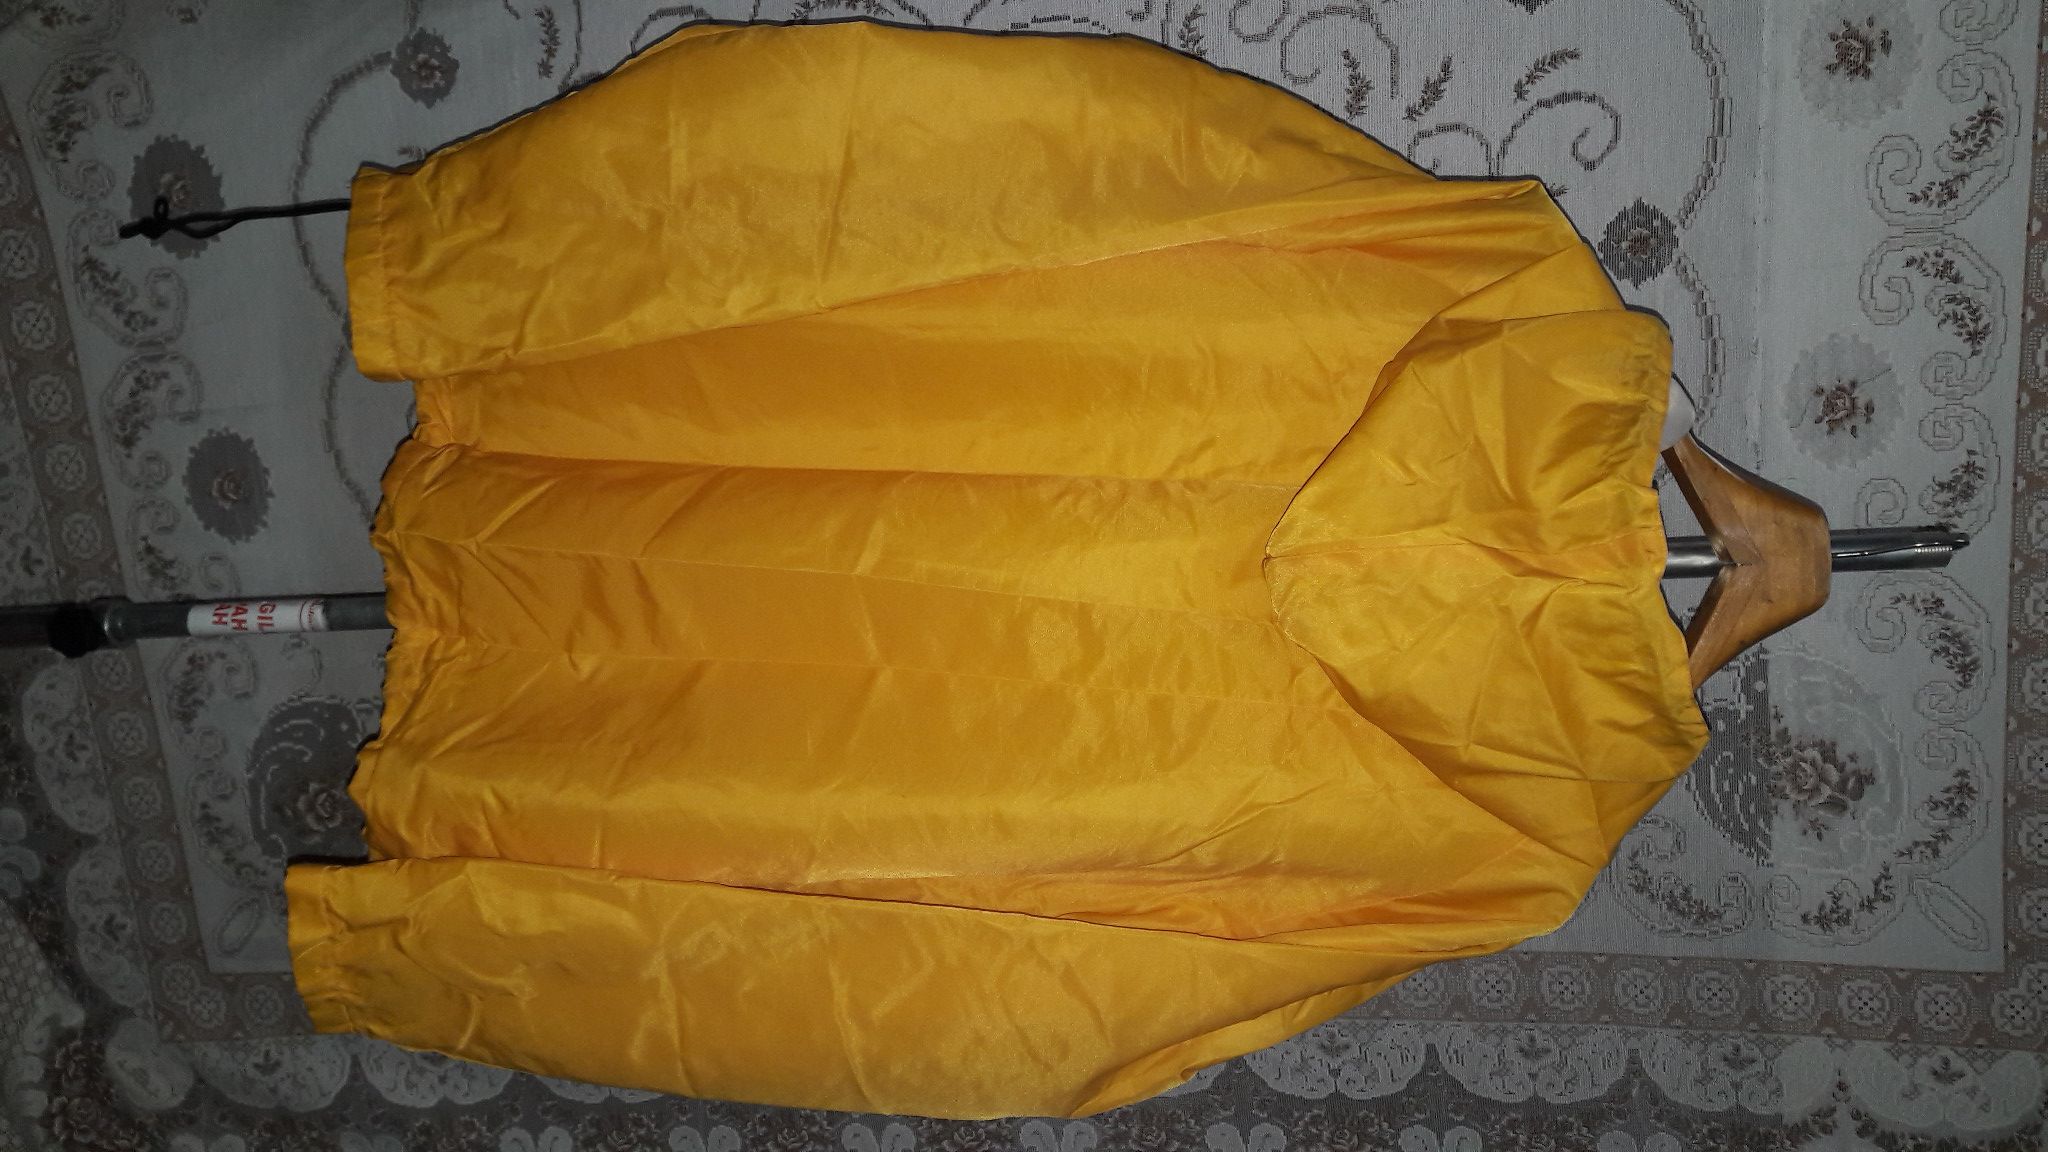 Penfield Vintage Penfield Jacket Hoodie 90s Sportswear Size US L / EU 52-54 / 3 - 7 Preview